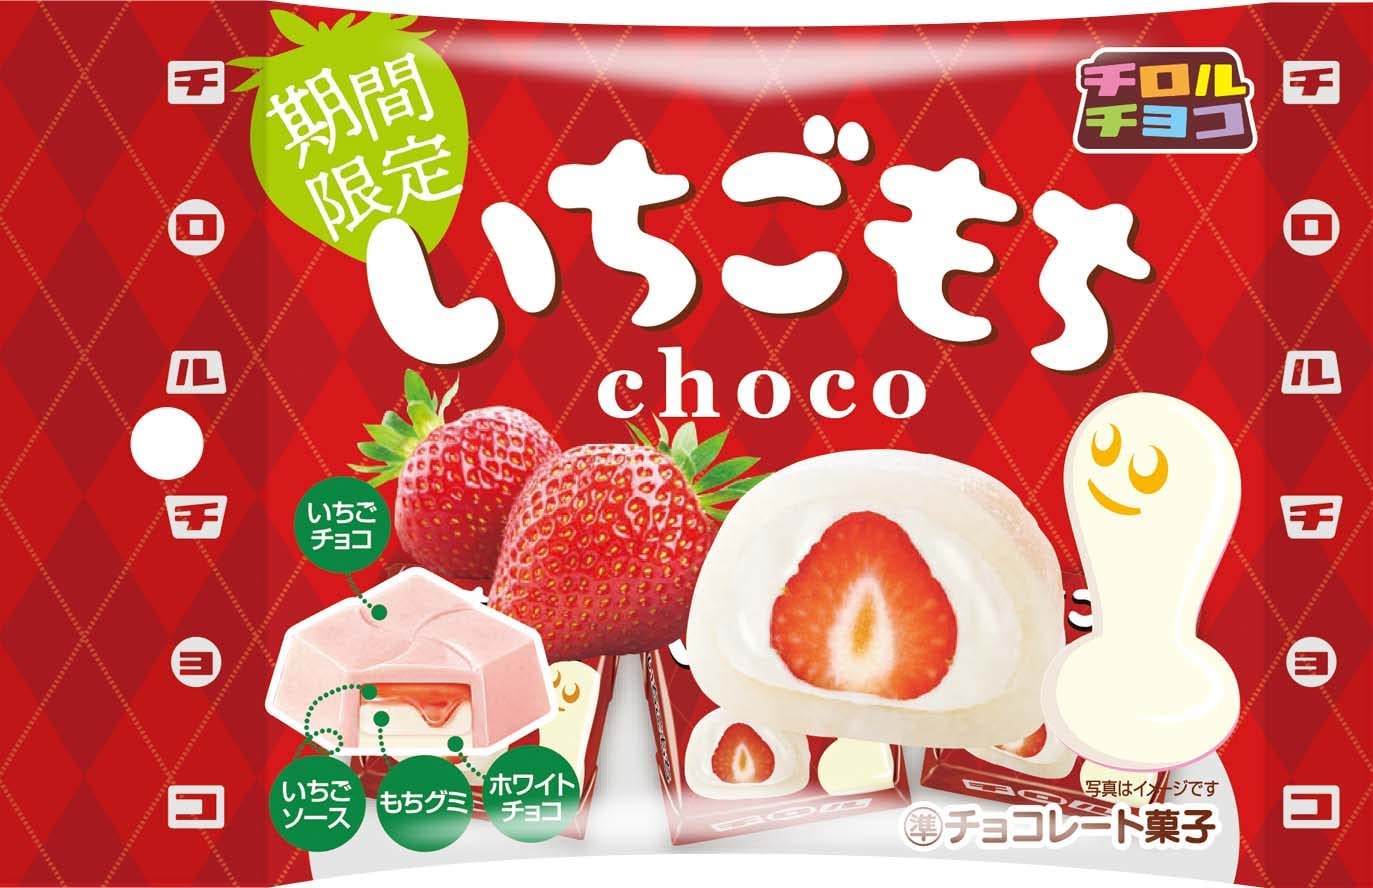 KIT KAT Japanese Mochi & Strawberry Daifuku in White Chocolate